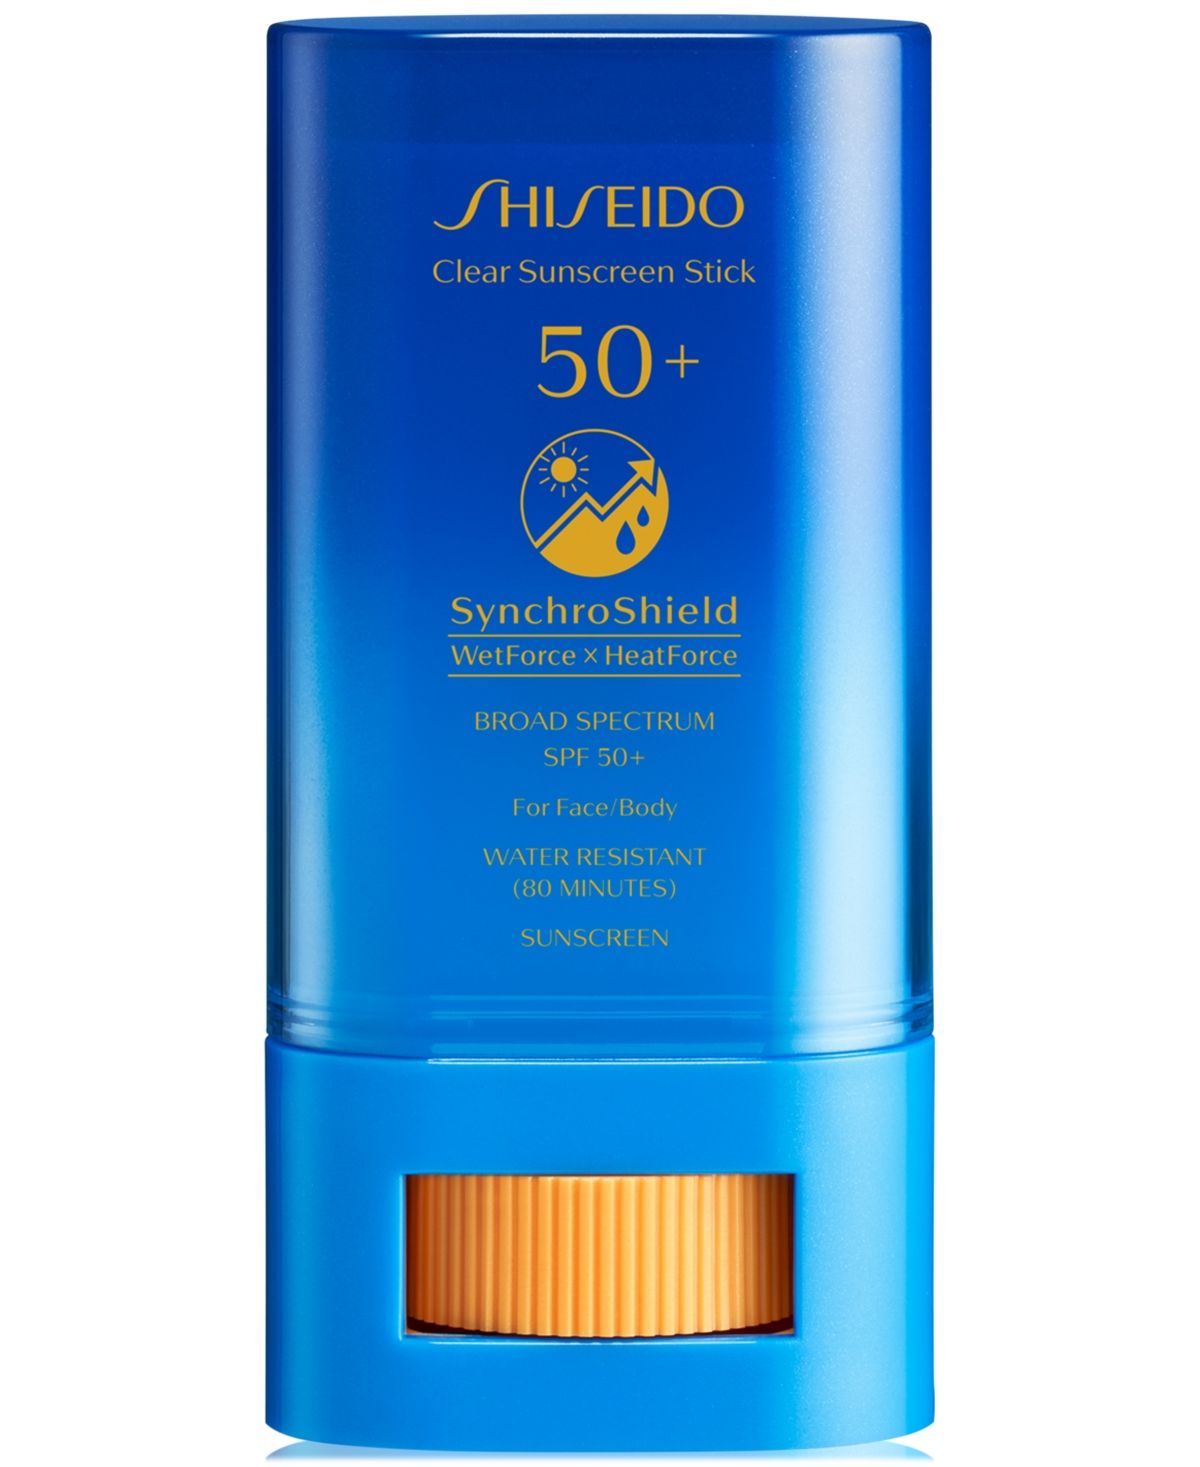 Shiseido Clear Sunscreen Stick Spf 50+, 20 g | Macys (US)